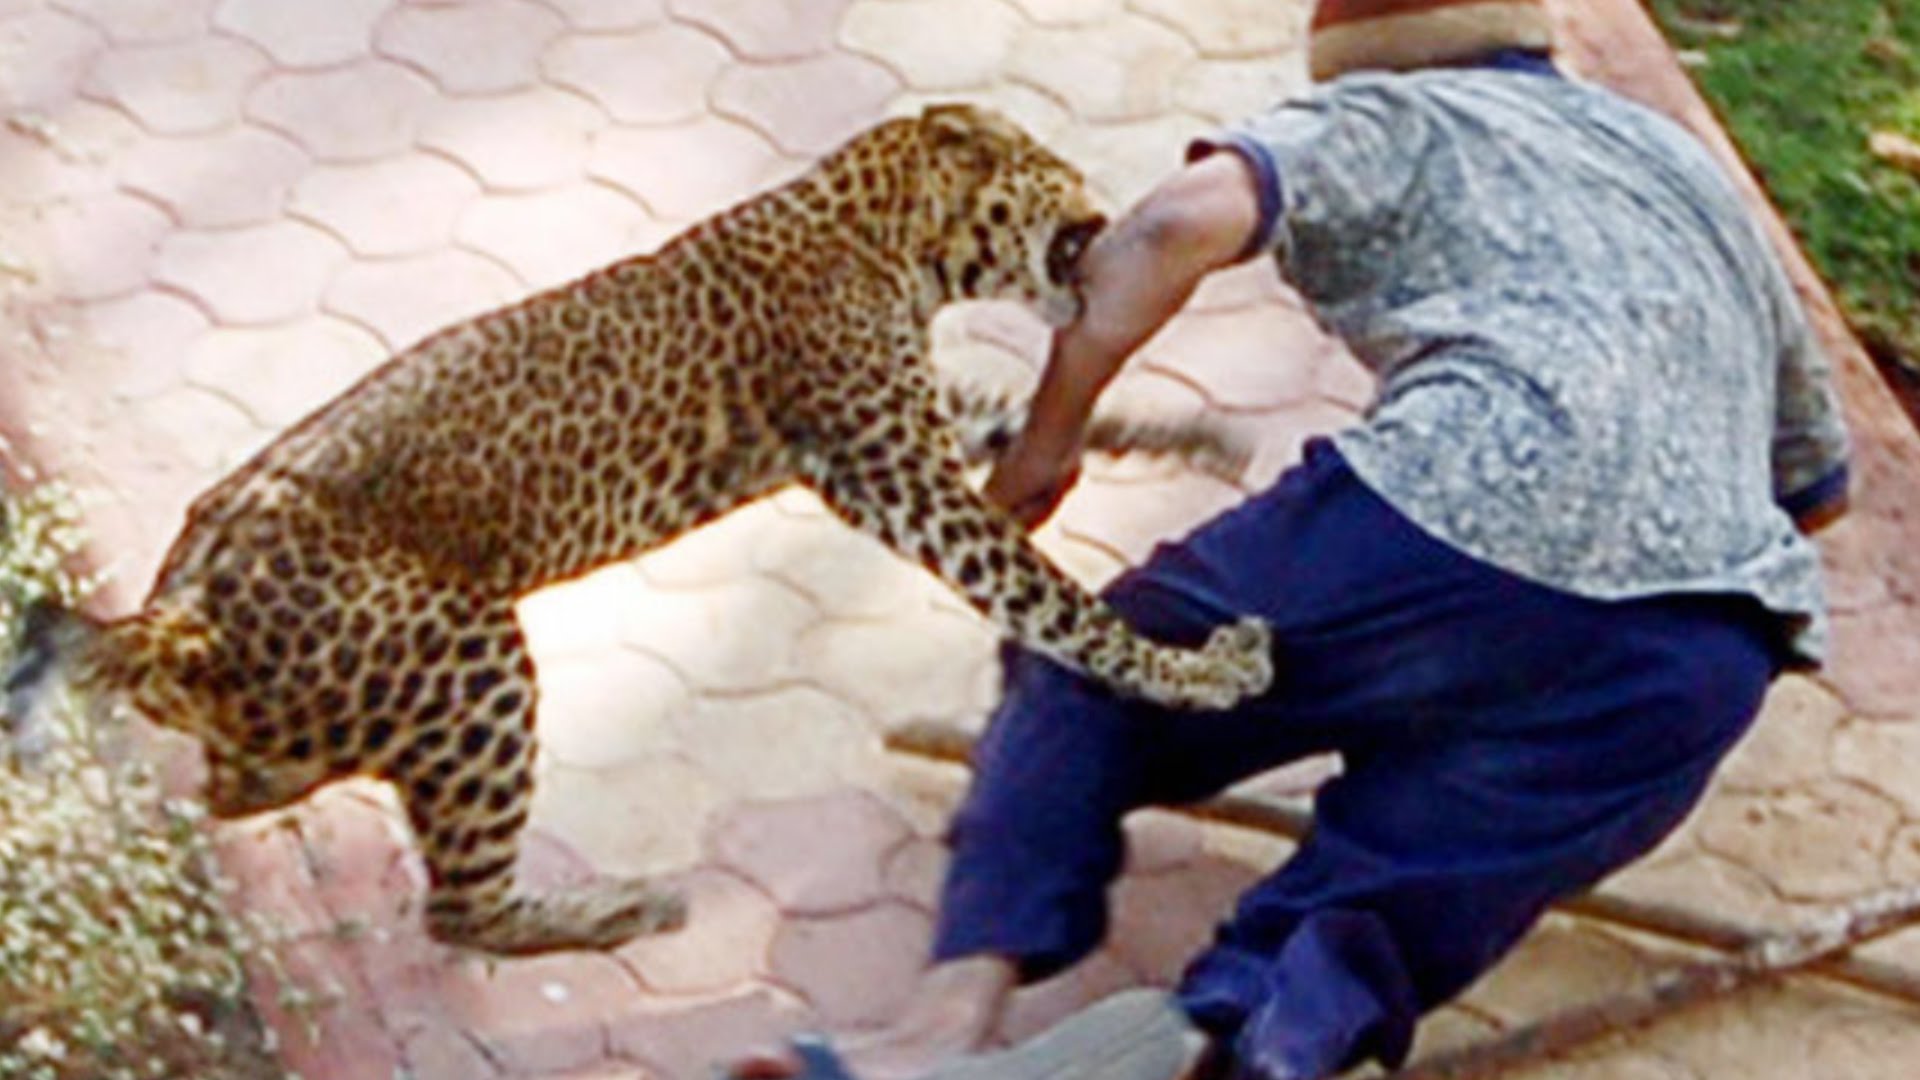 Dangerous wild animals. Ягуар нападает. Нападающий леопард. Животные нападают на людей. Нападения гепардов на людей.